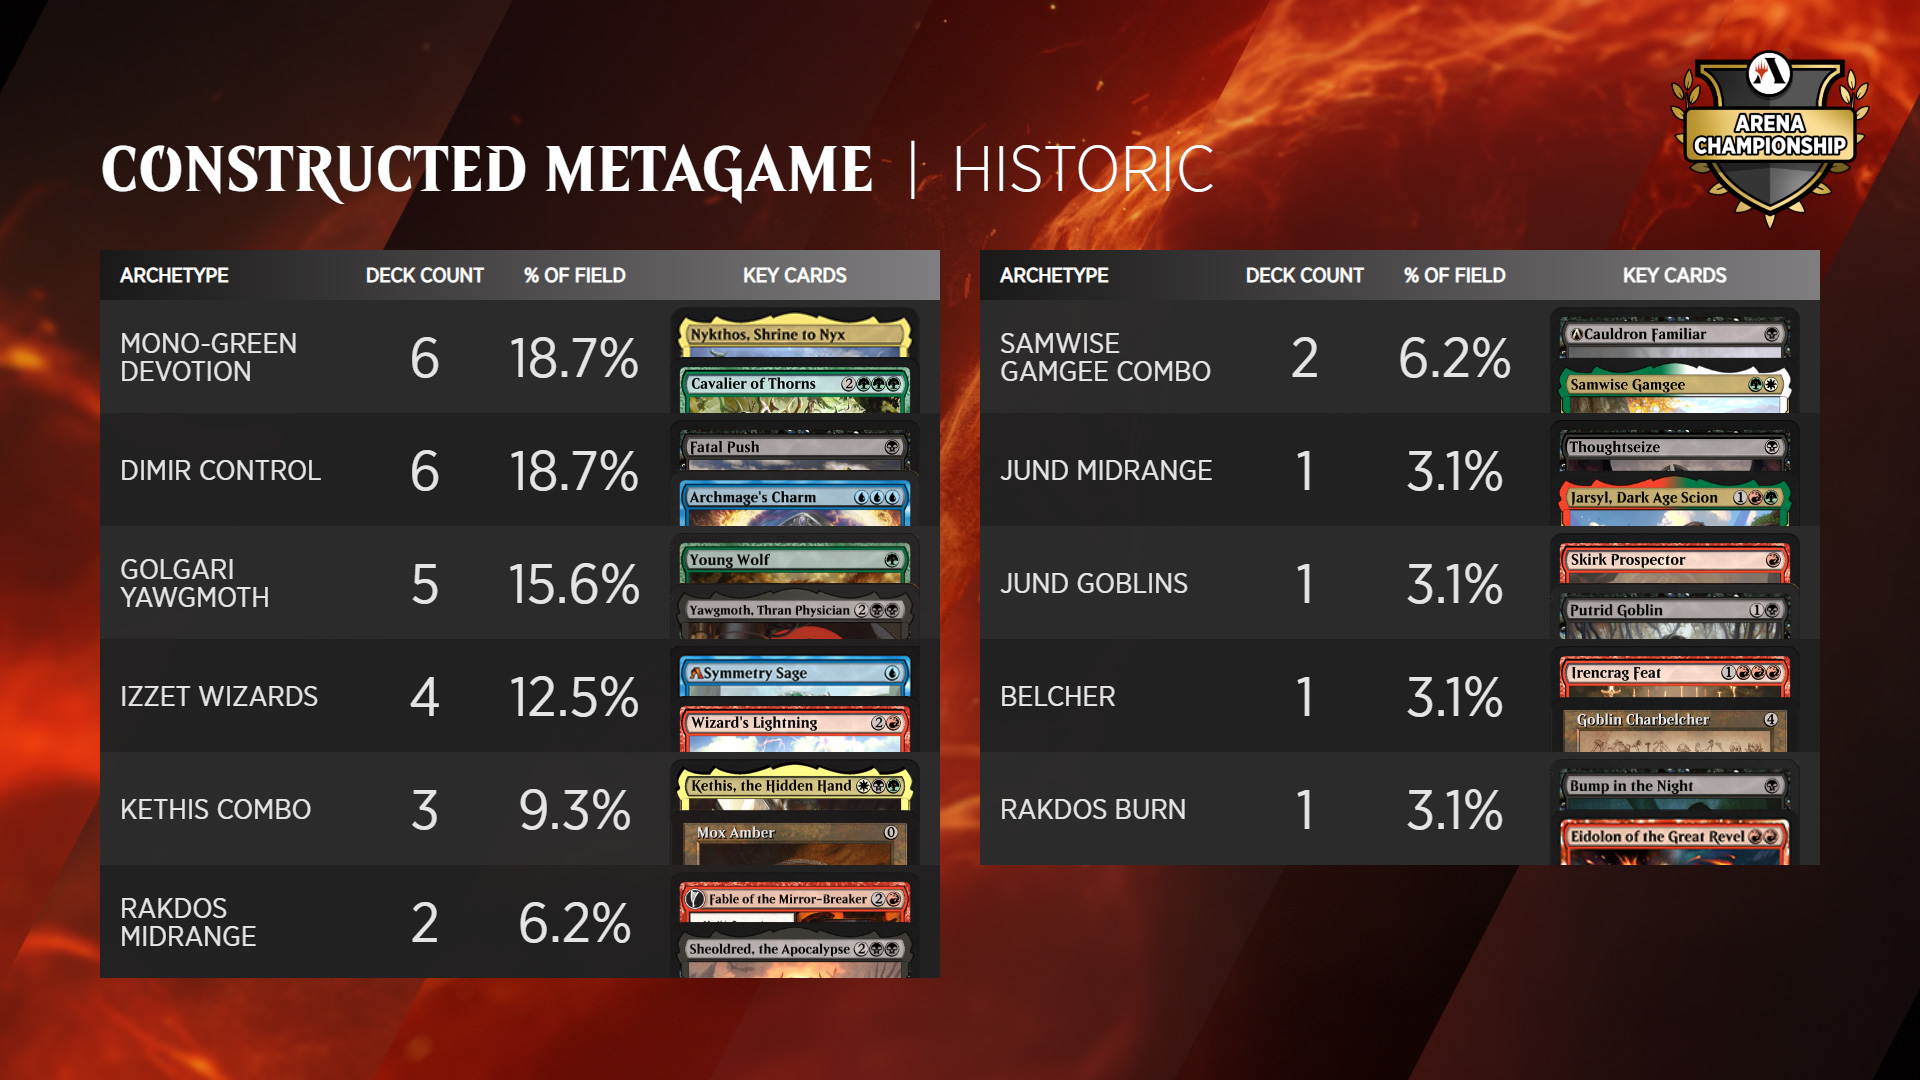 Battlefield 4™ Steam Charts & Stats